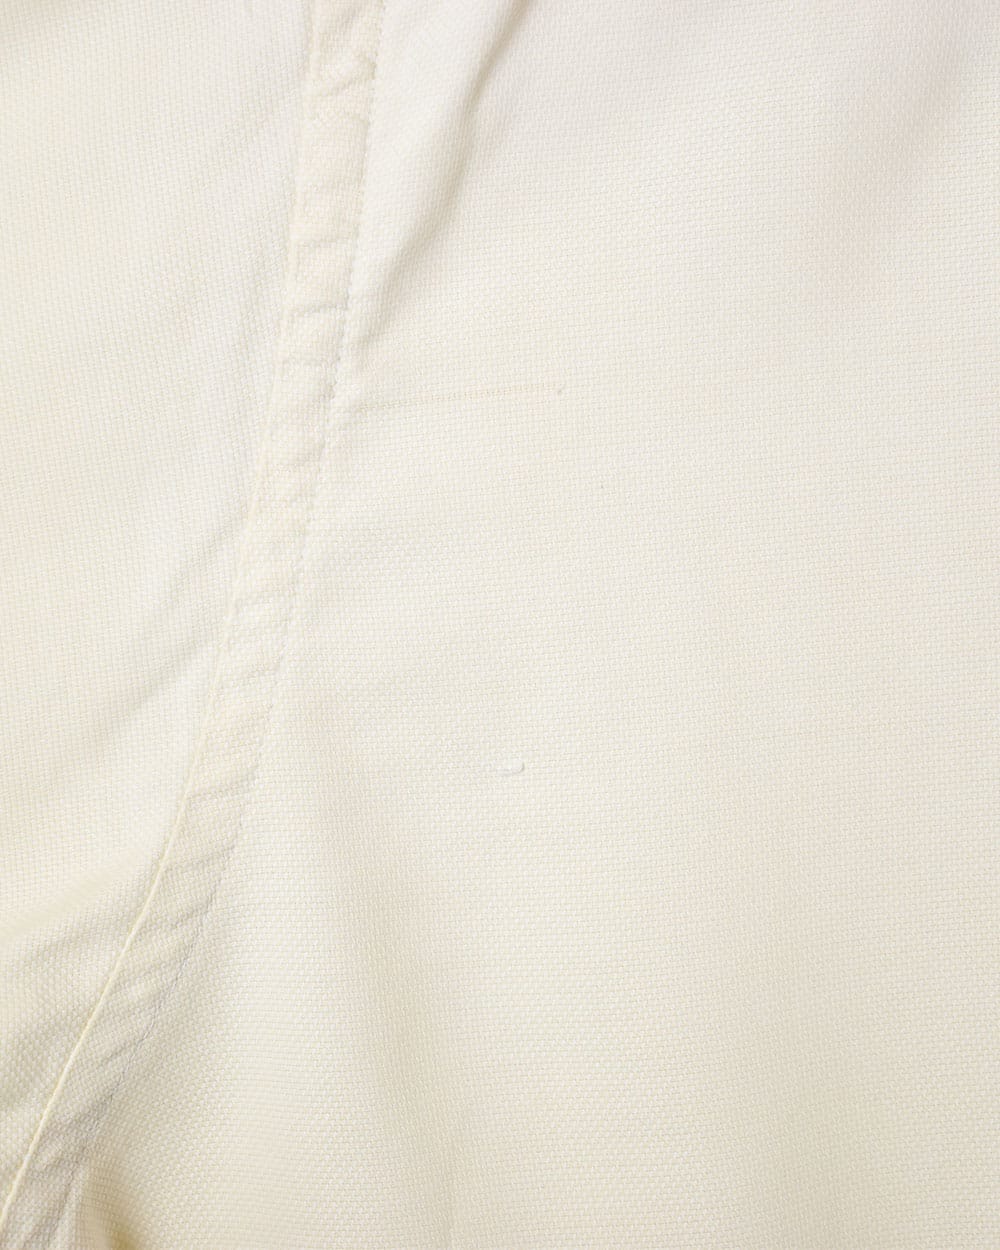 Neutral Chemise Lacoste Short Sleeved Shirt - X-Large